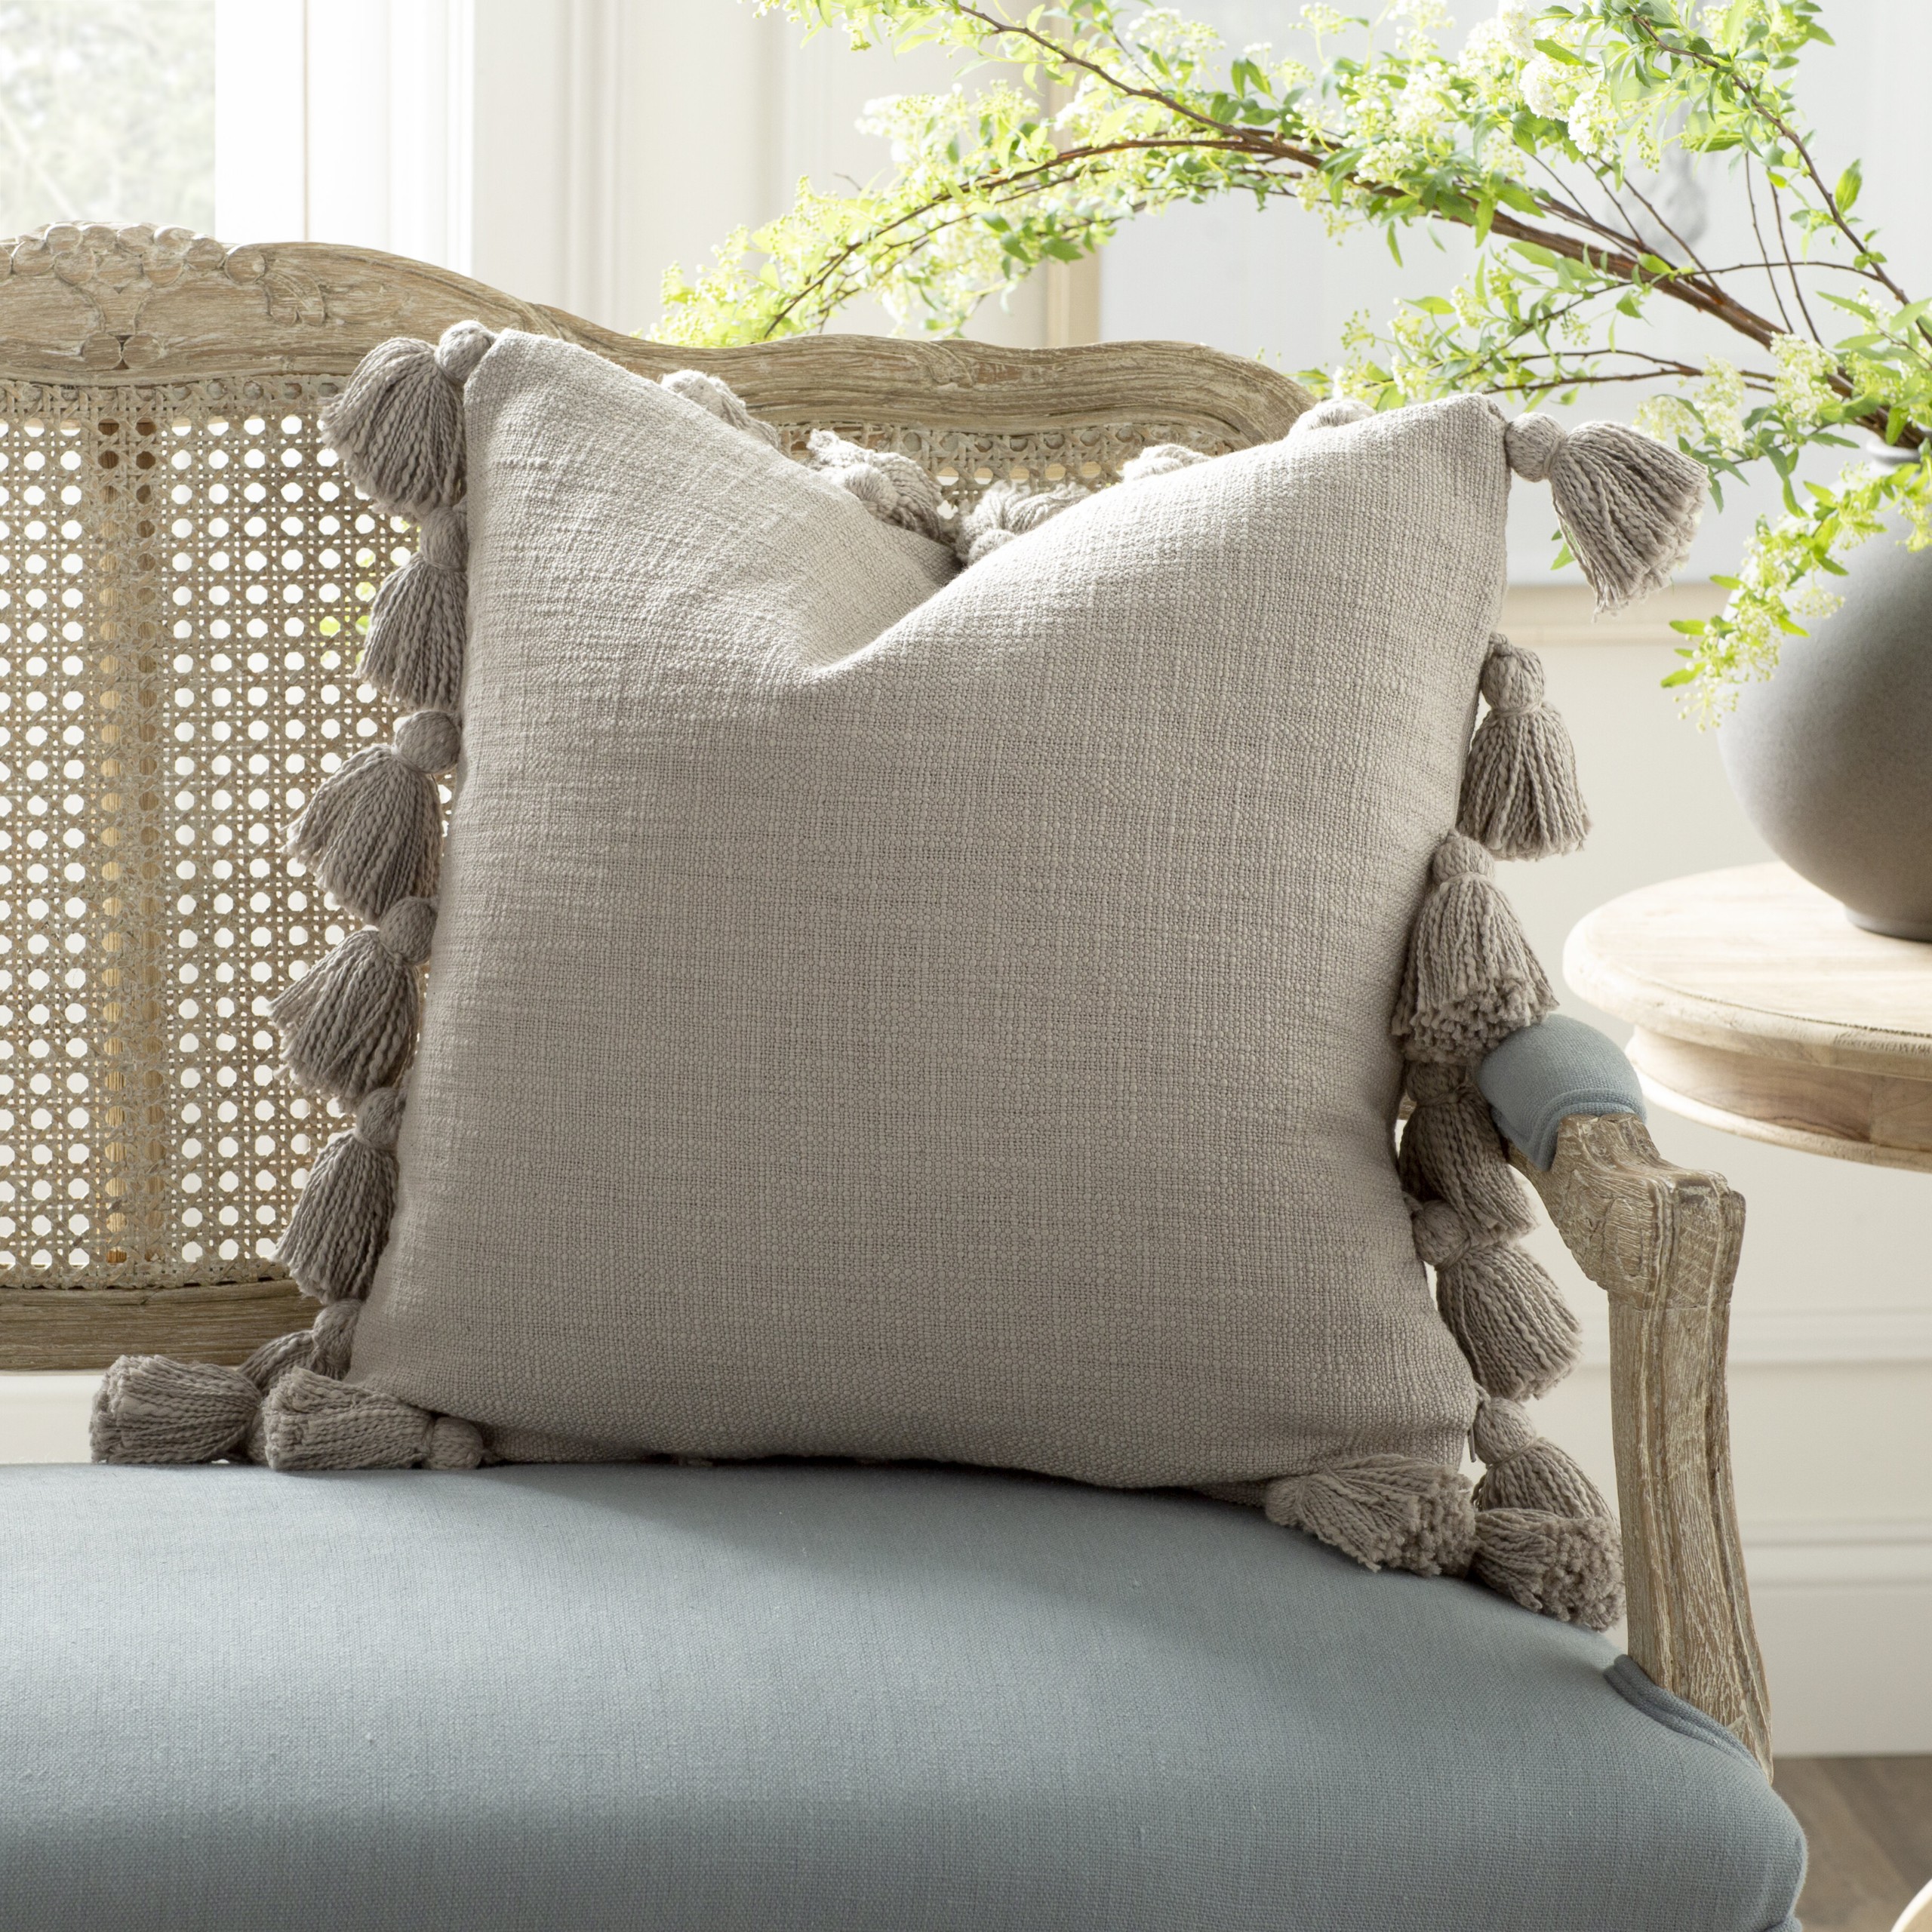 Designart CU12953-20-20-C Wild Zebras and Elephant African Round Cushion Cover for Living Room Sofa Throw Pillow 20 